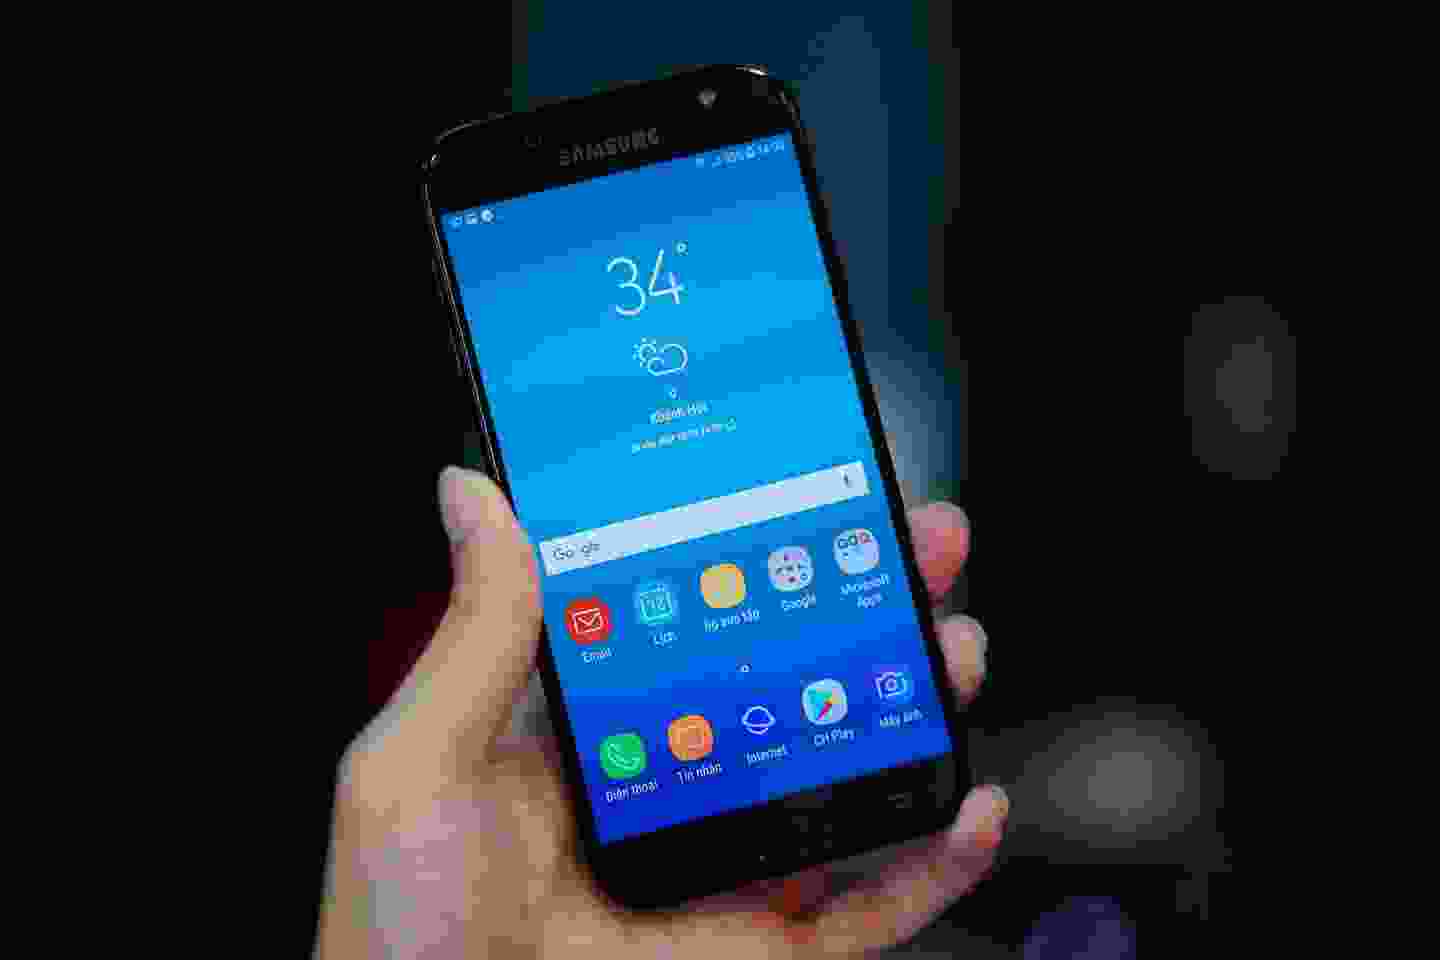 Samsung Galaxy J7 Pro: prós e contras - Techmania